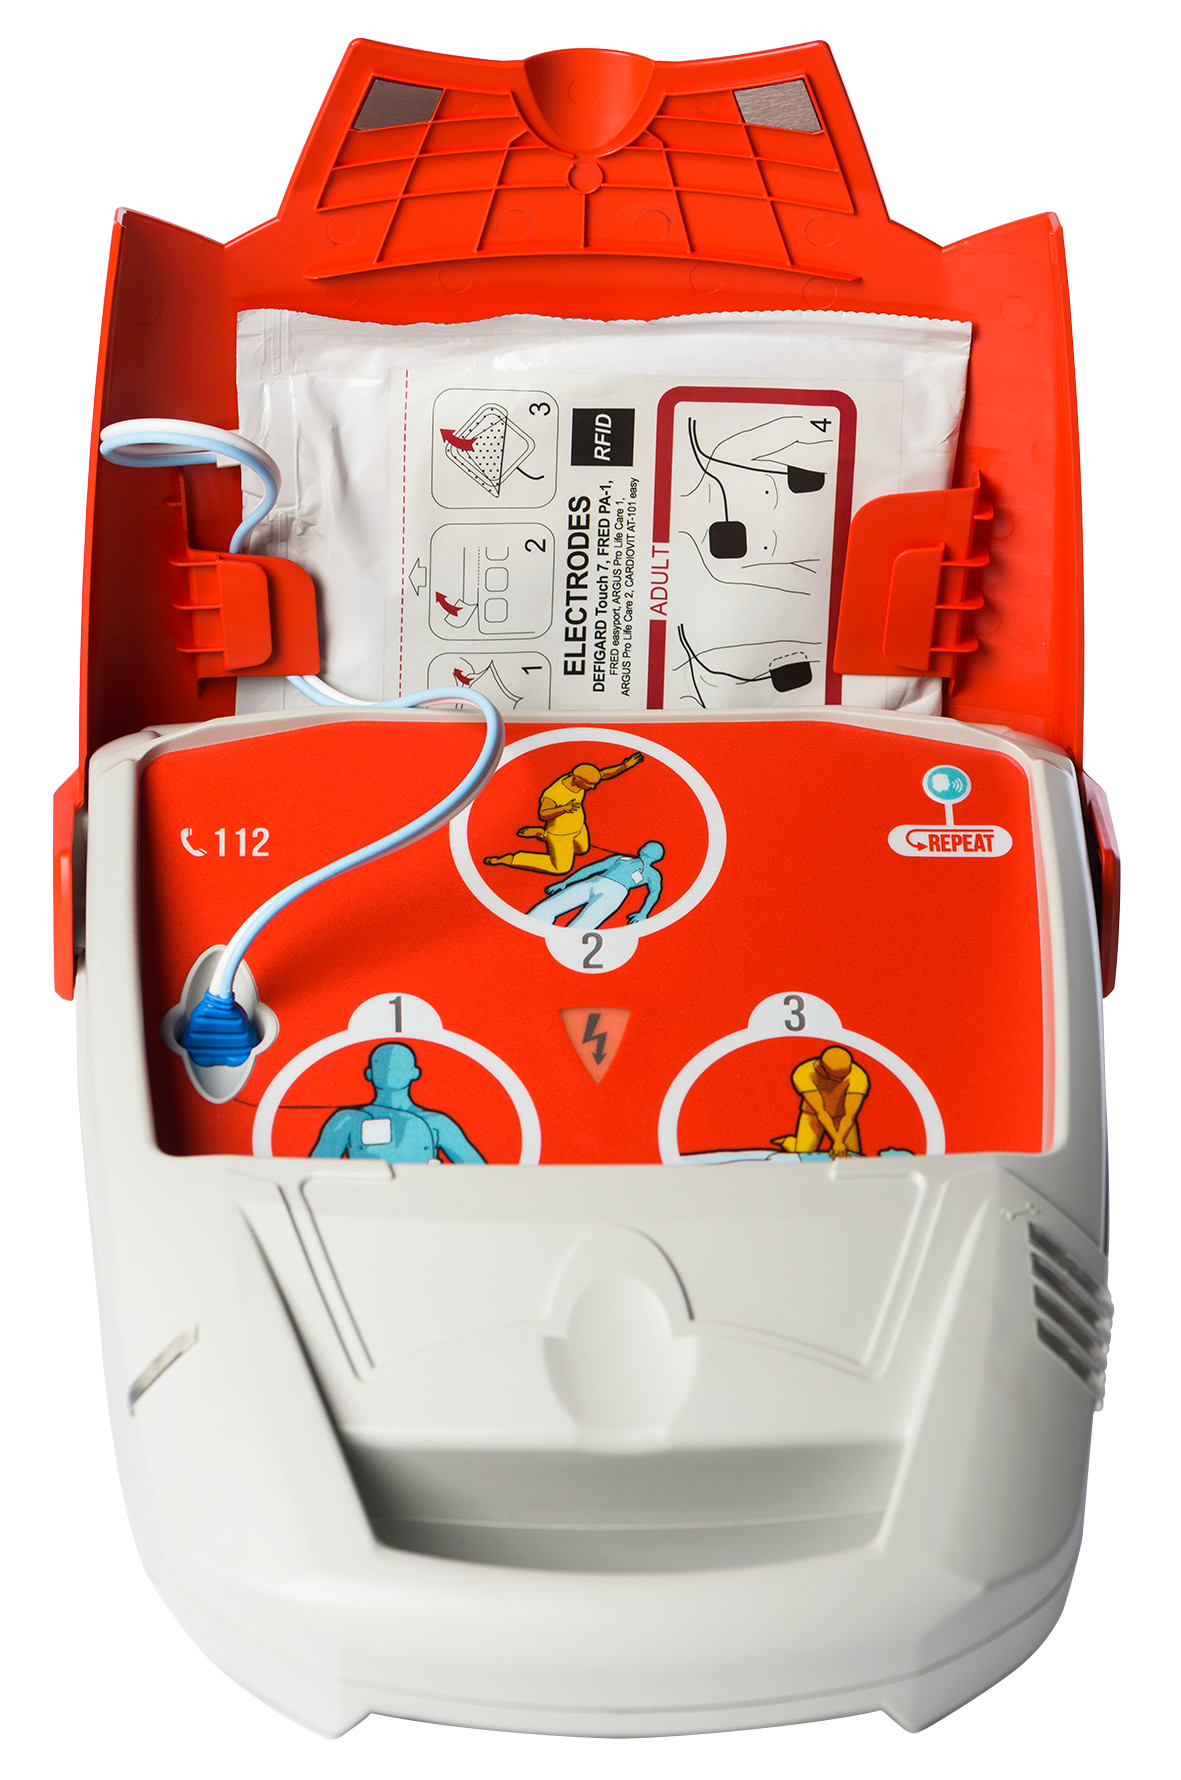 Schiller Fred PA-1 defibrillator - volautomatisch - Meertalig